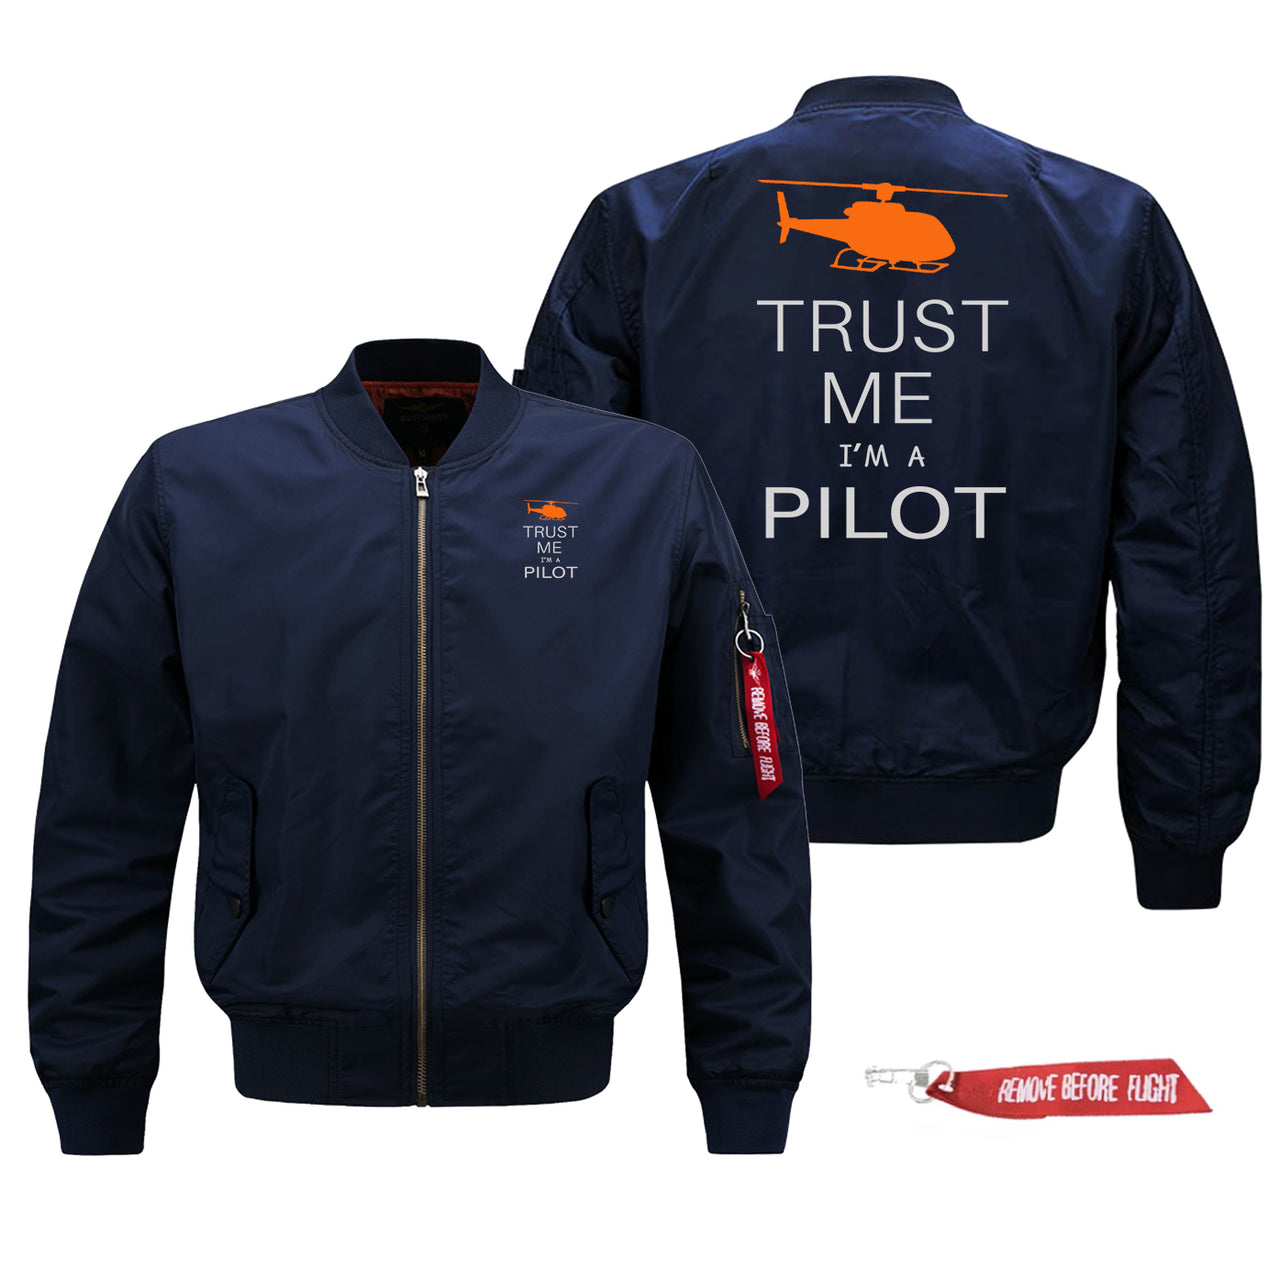 Trust Me I'm a Pilot (Helicopter) Designed Pilot Jackets (Customizable)